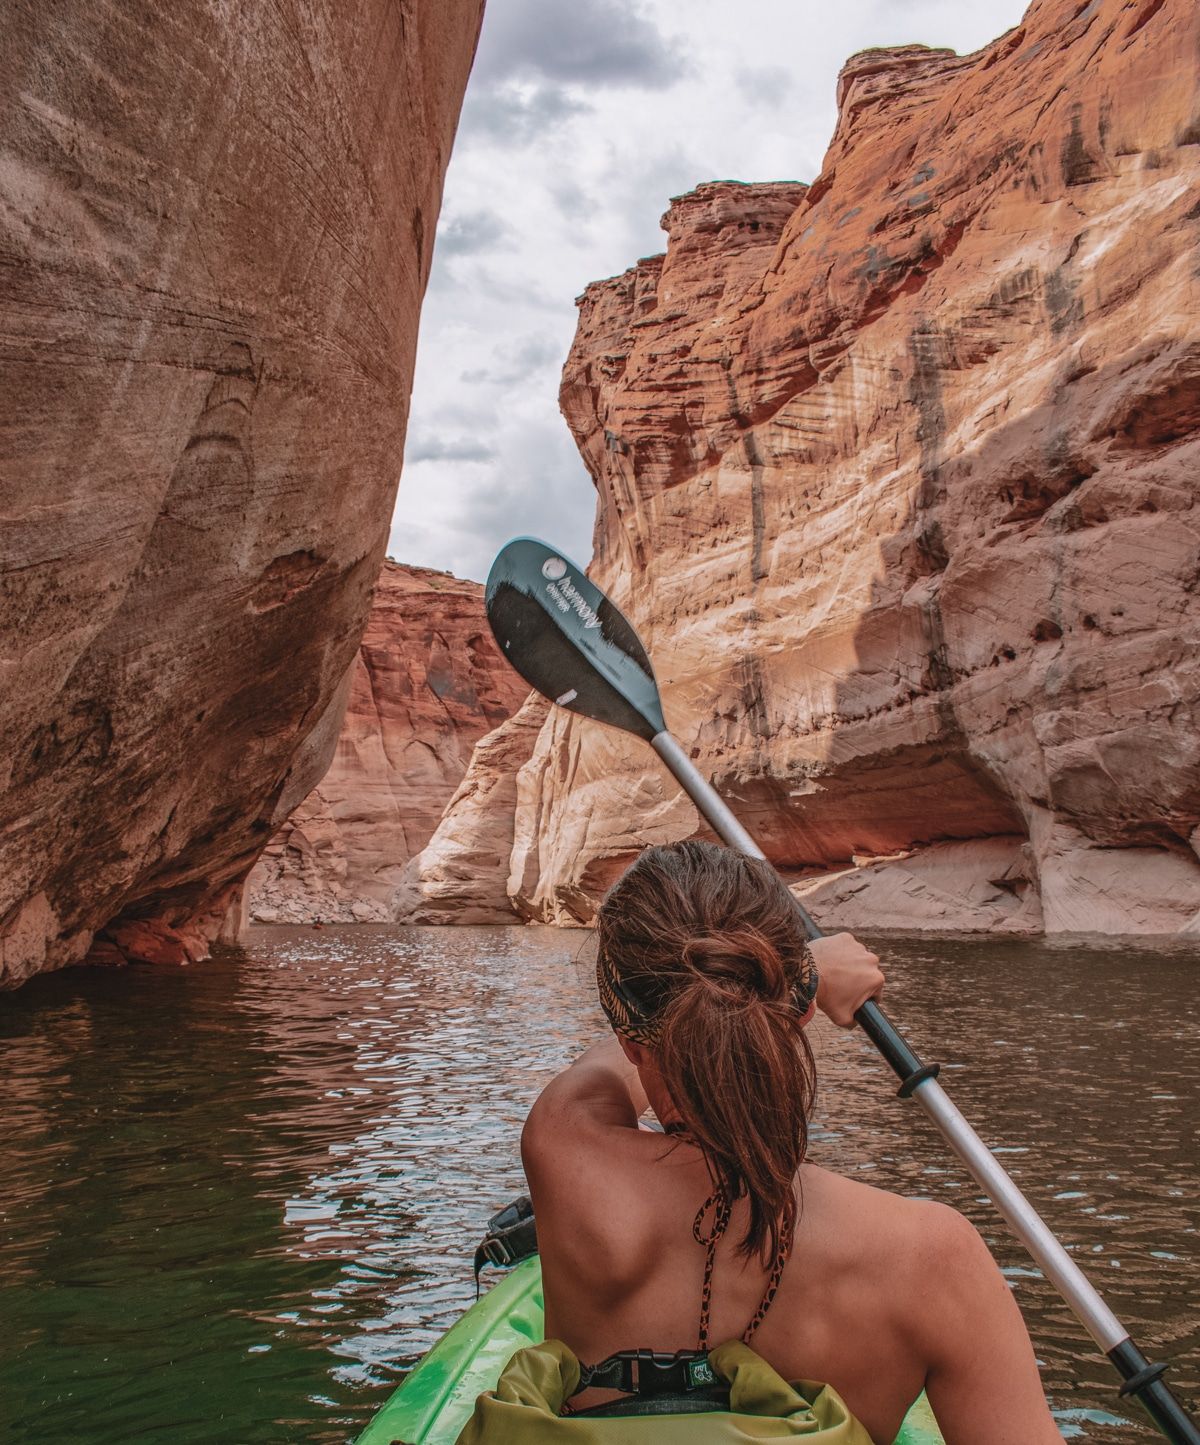 Taken from behind as a woman kayaks through narrow canyons.